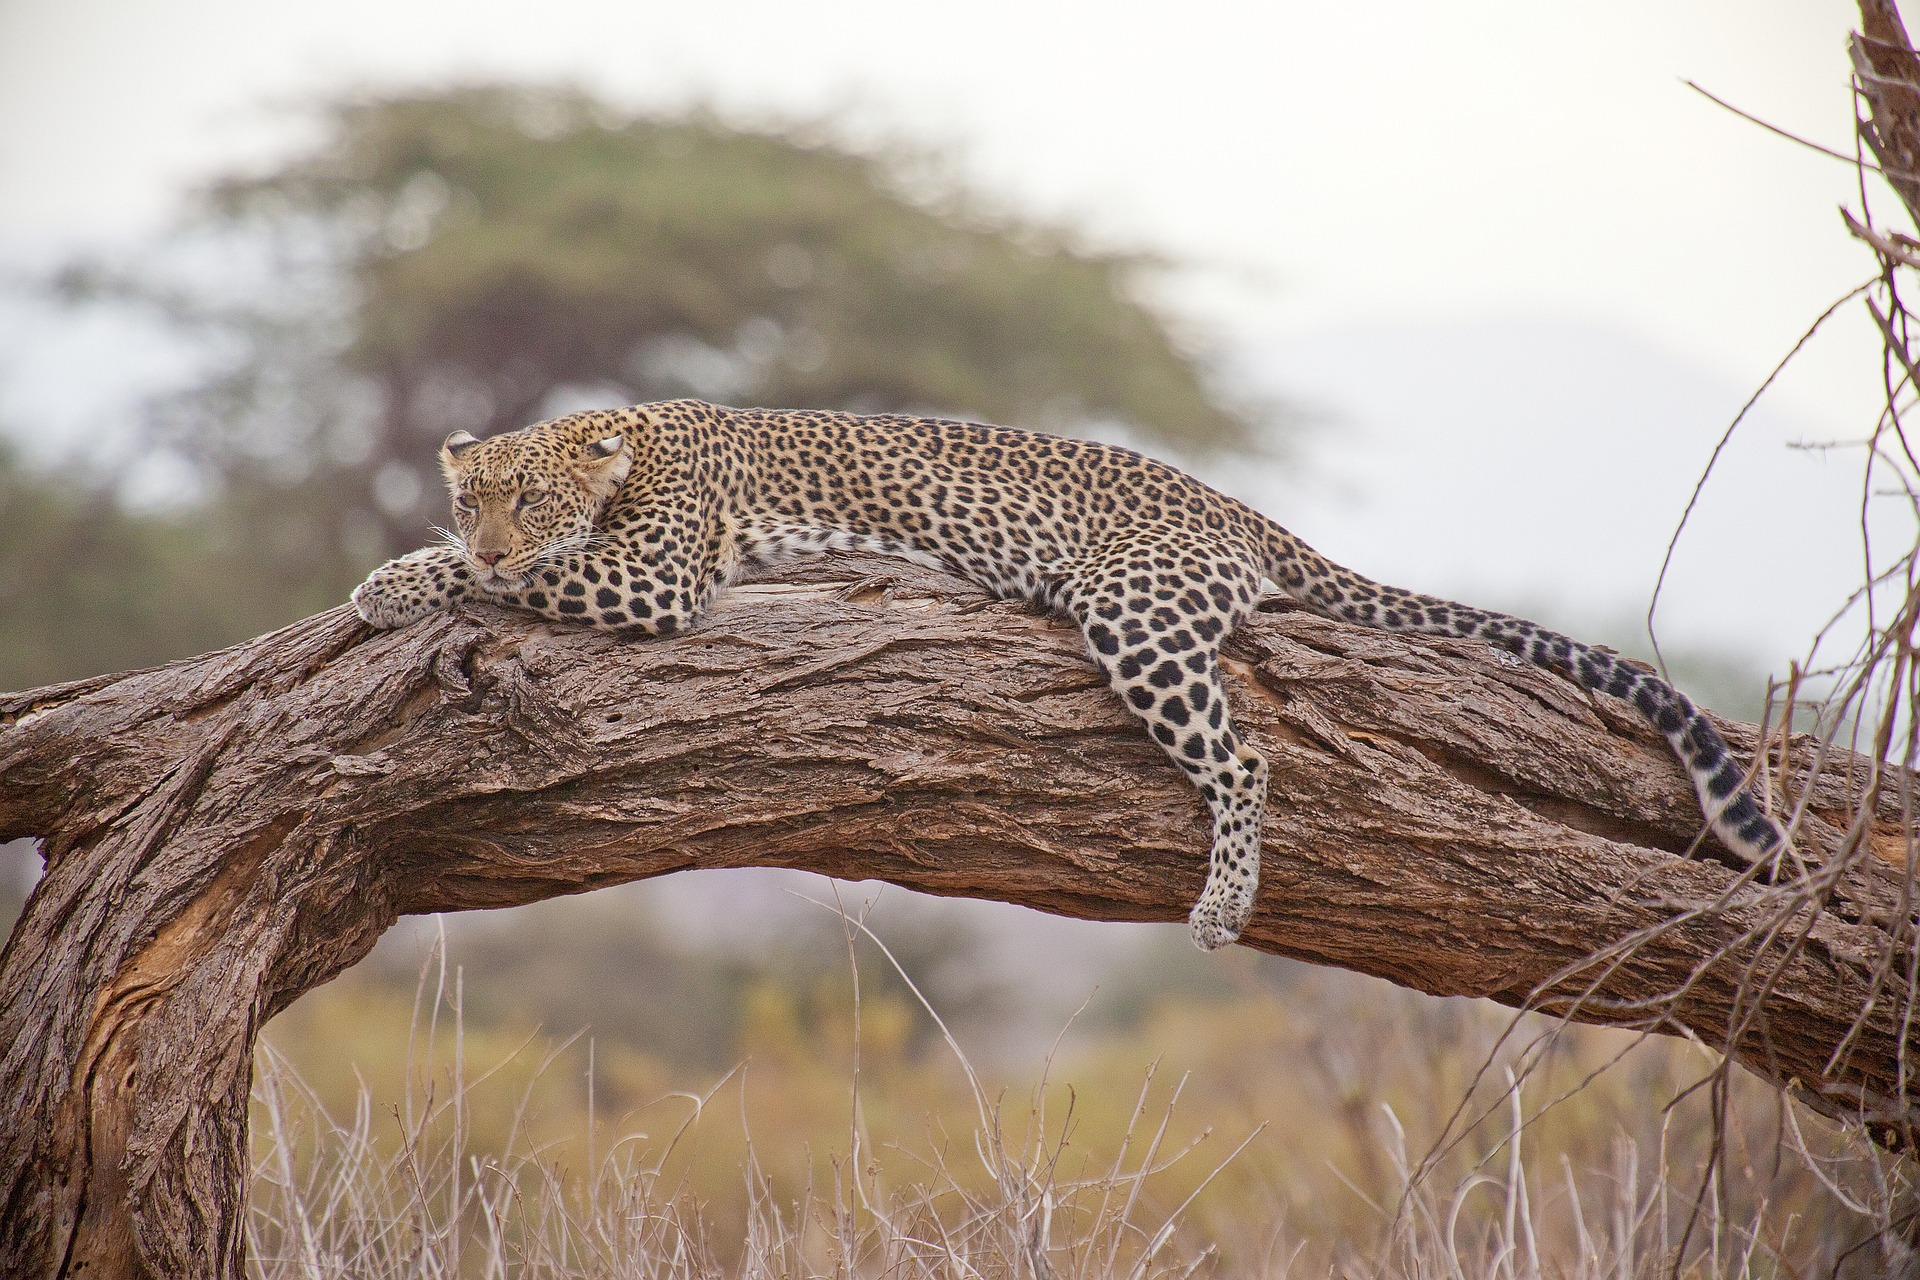 International Leopard Day: poaching catastrophe